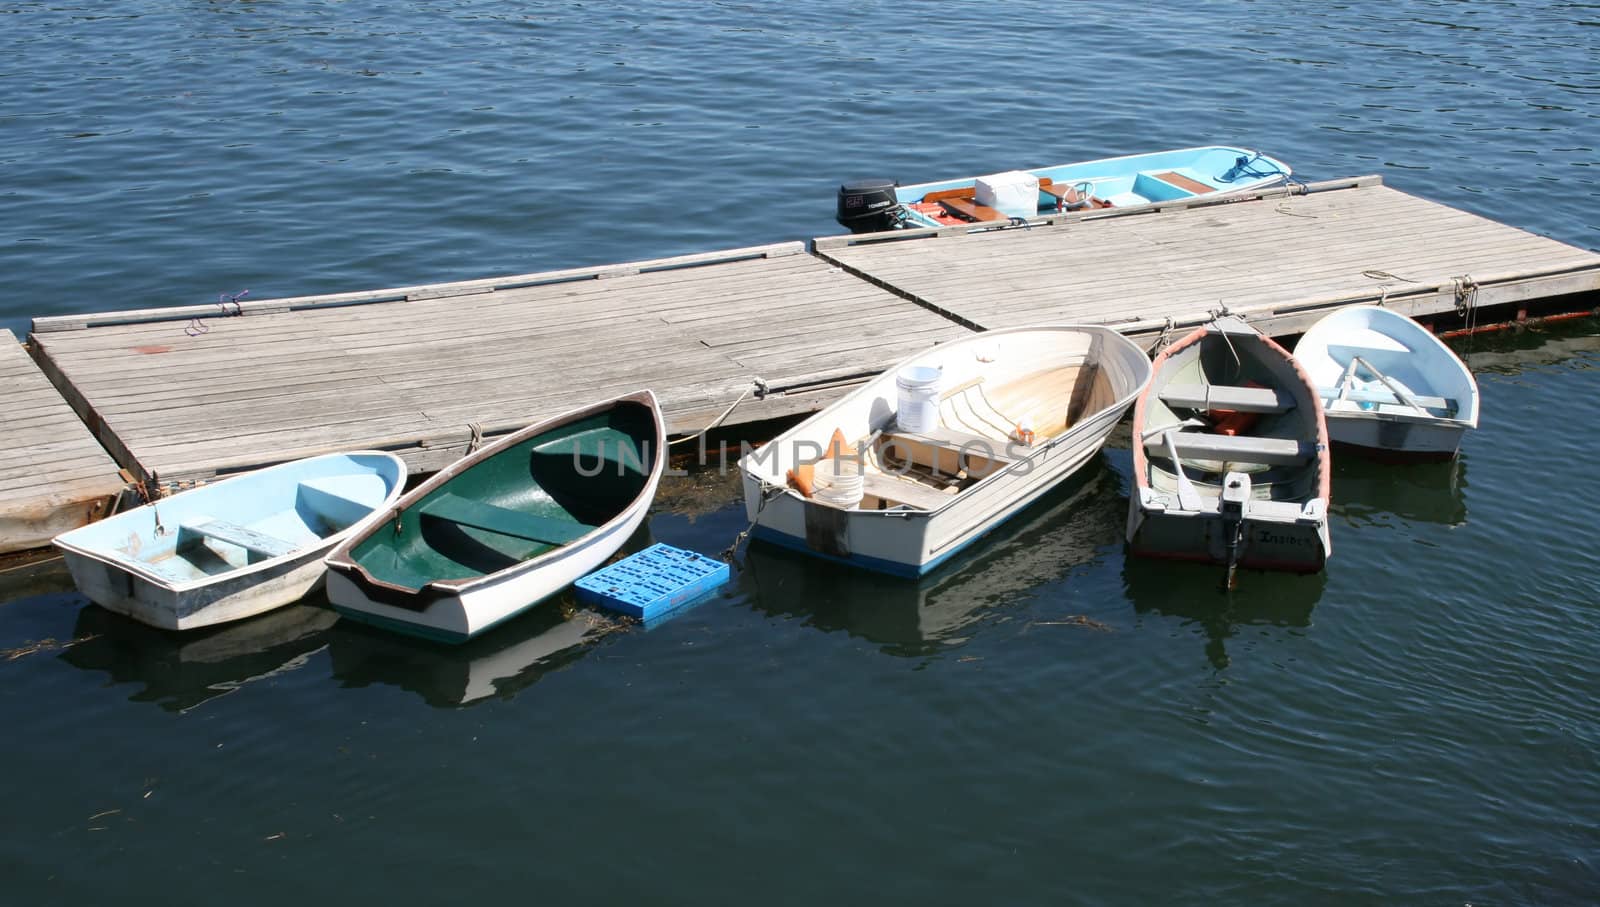 six skiffs, tied up at dock